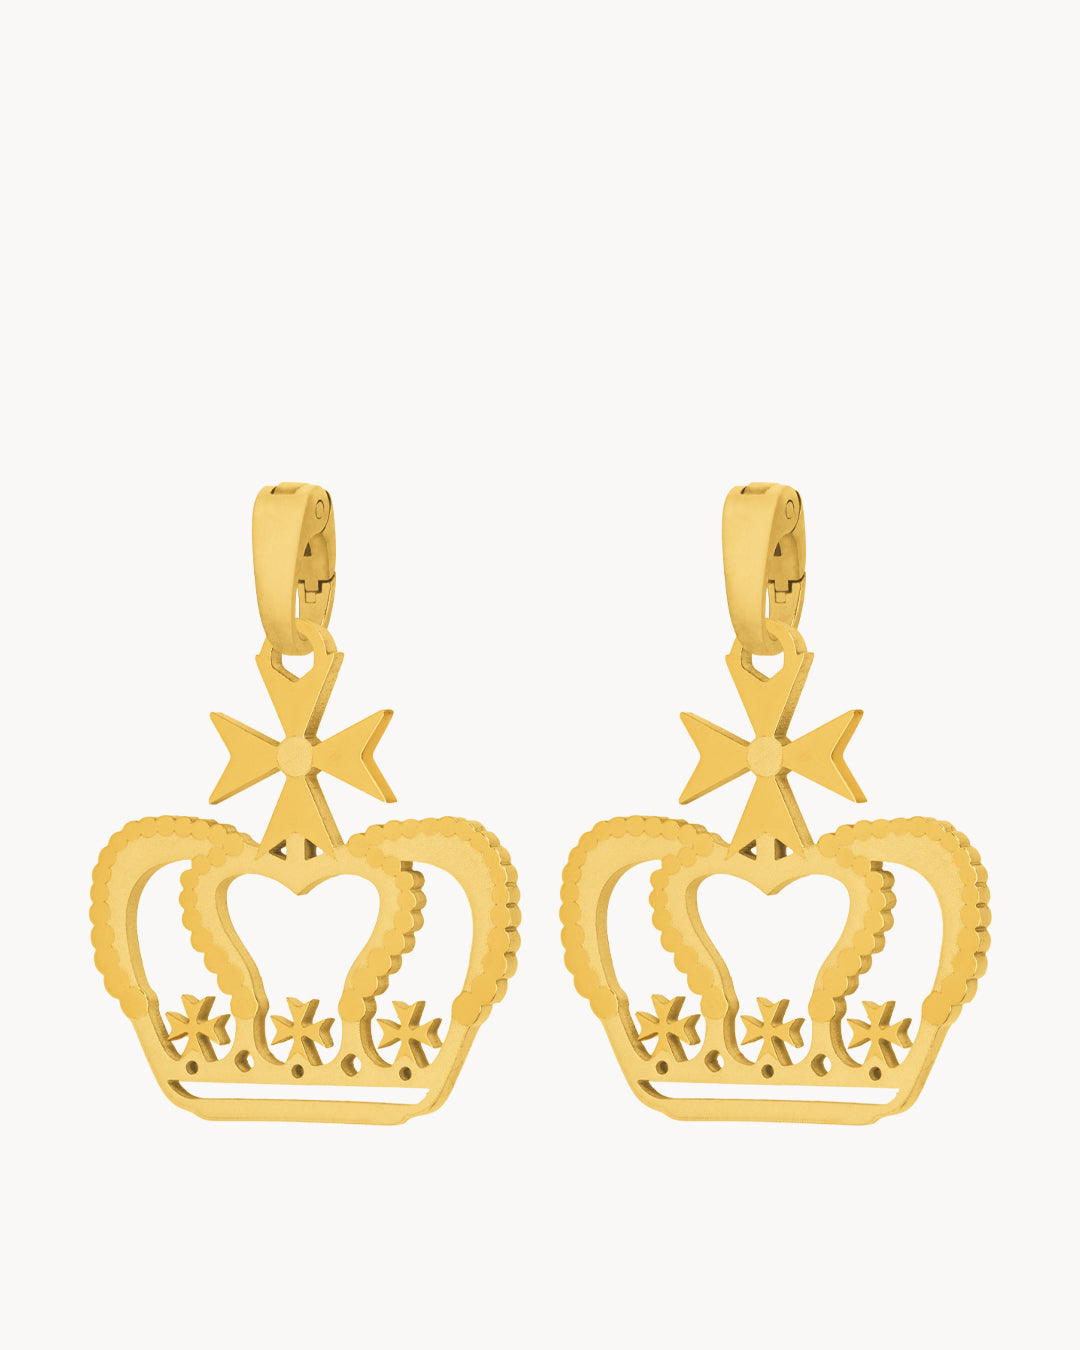 The Crown Pendant, Gold Earring Pendants